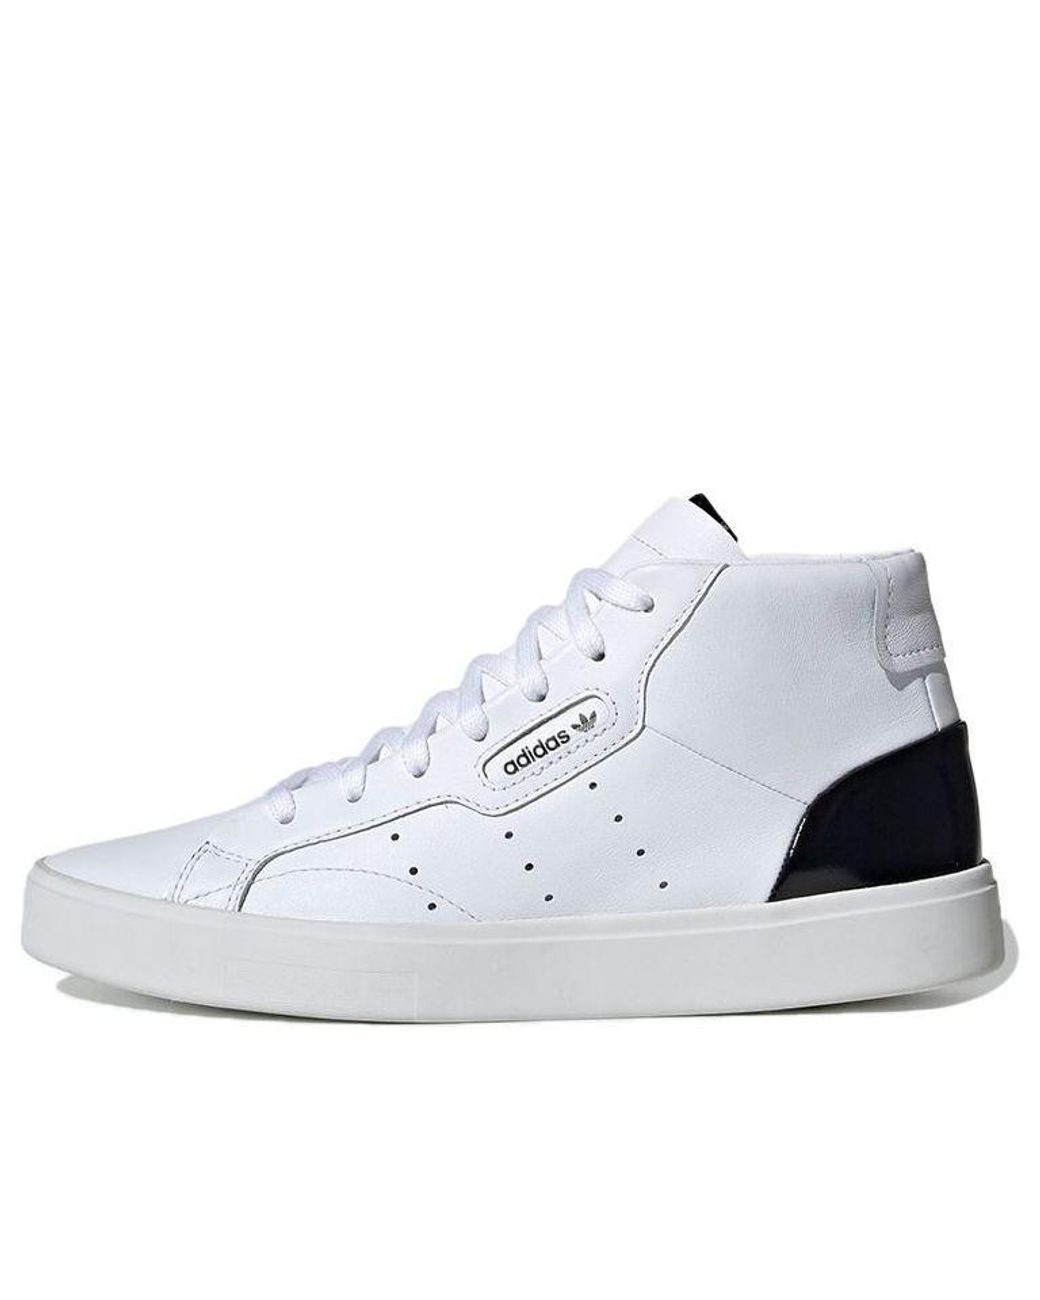 adidas Originals Sleek Mid Sneakers/shoes in White | Lyst